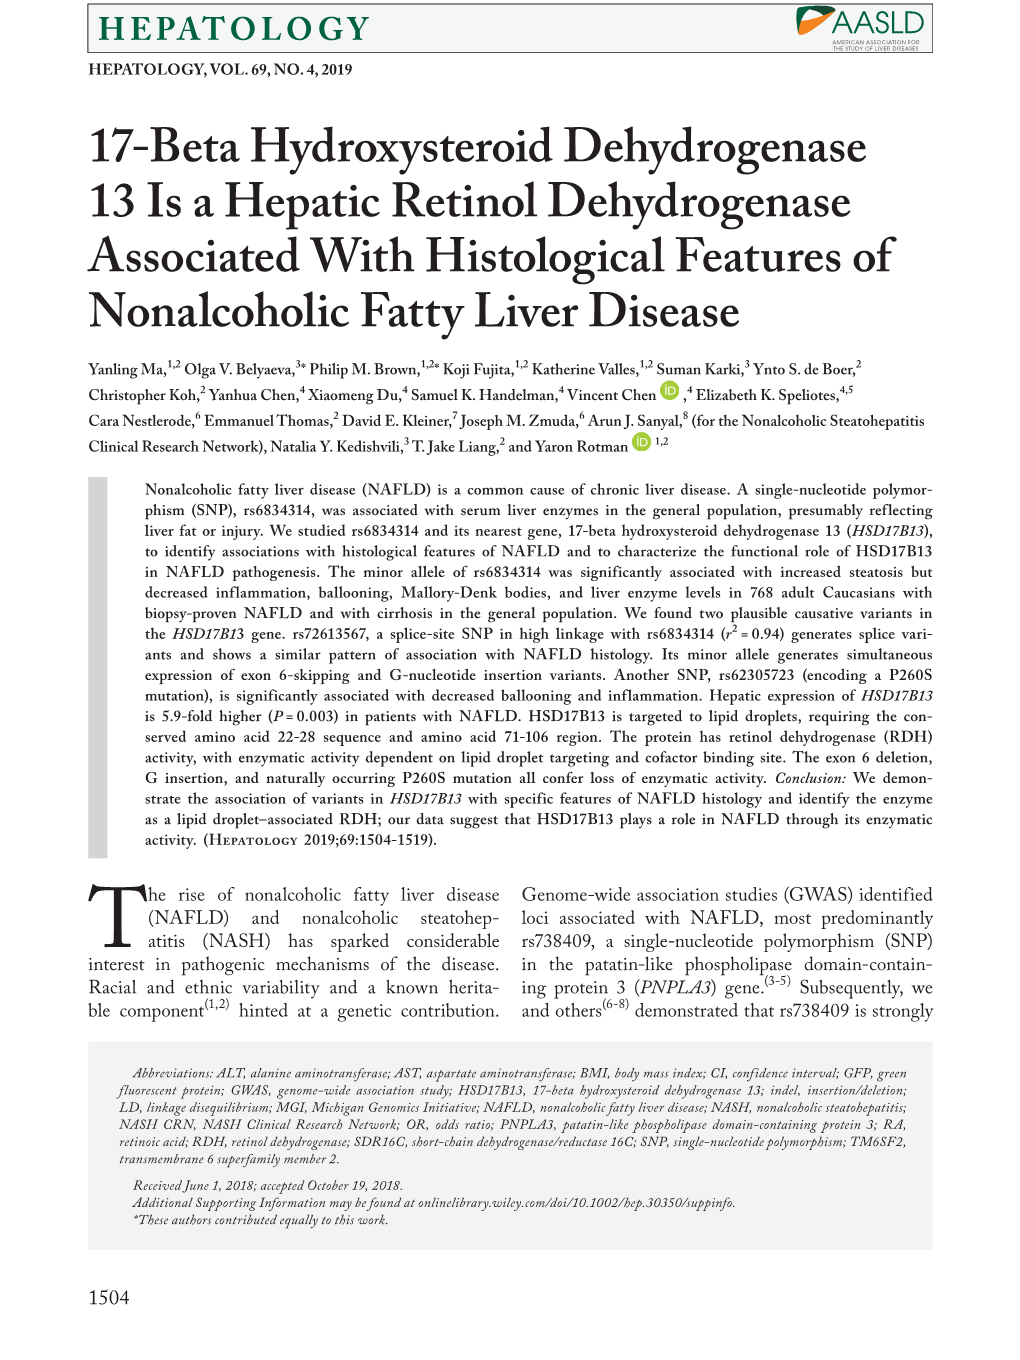 Beta Hydroxysteroid Dehydrogenase 13&#X00a0